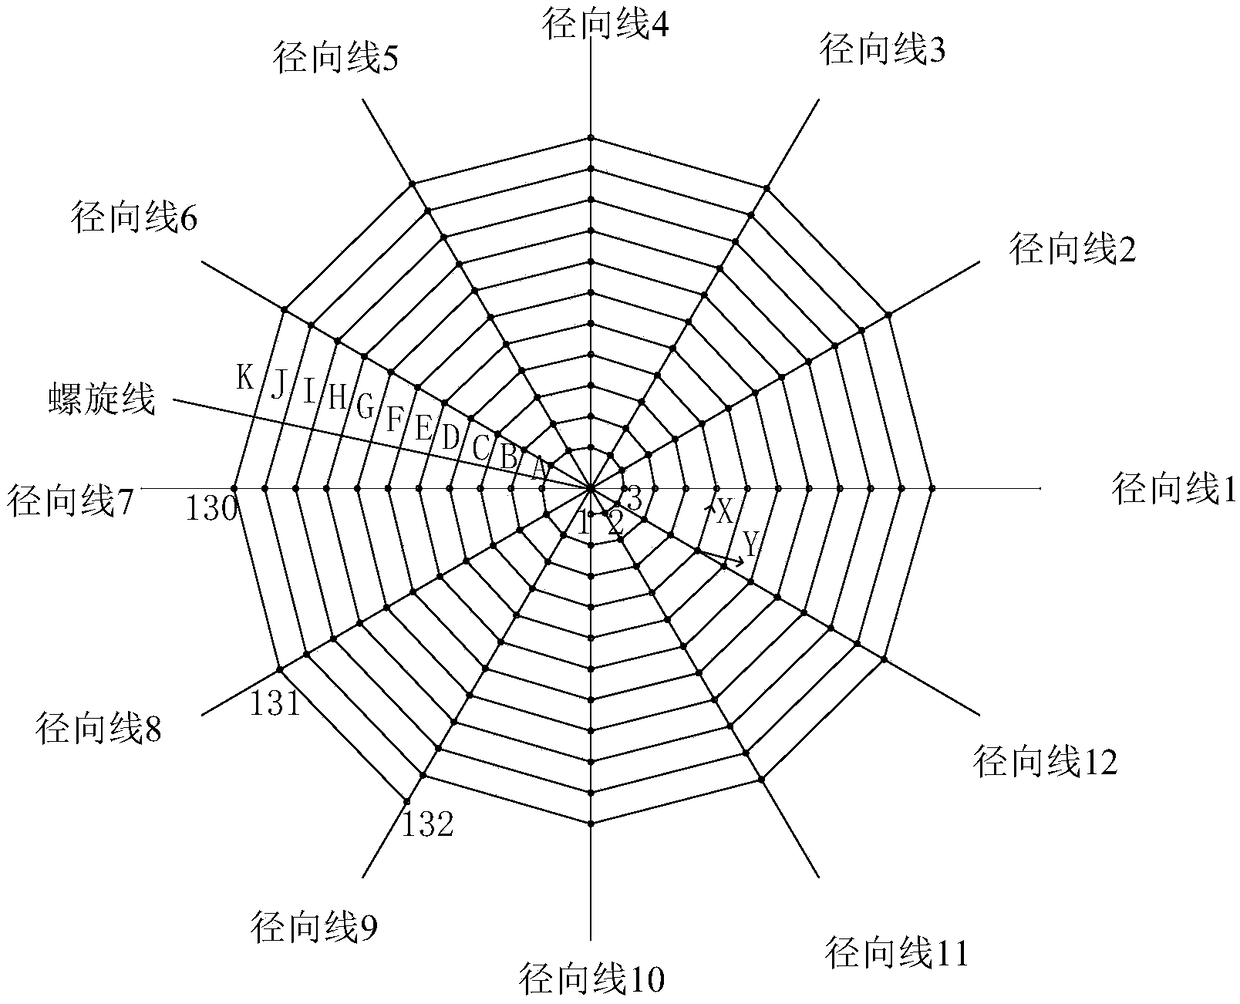 Network topology establishment method based on artificial spider web